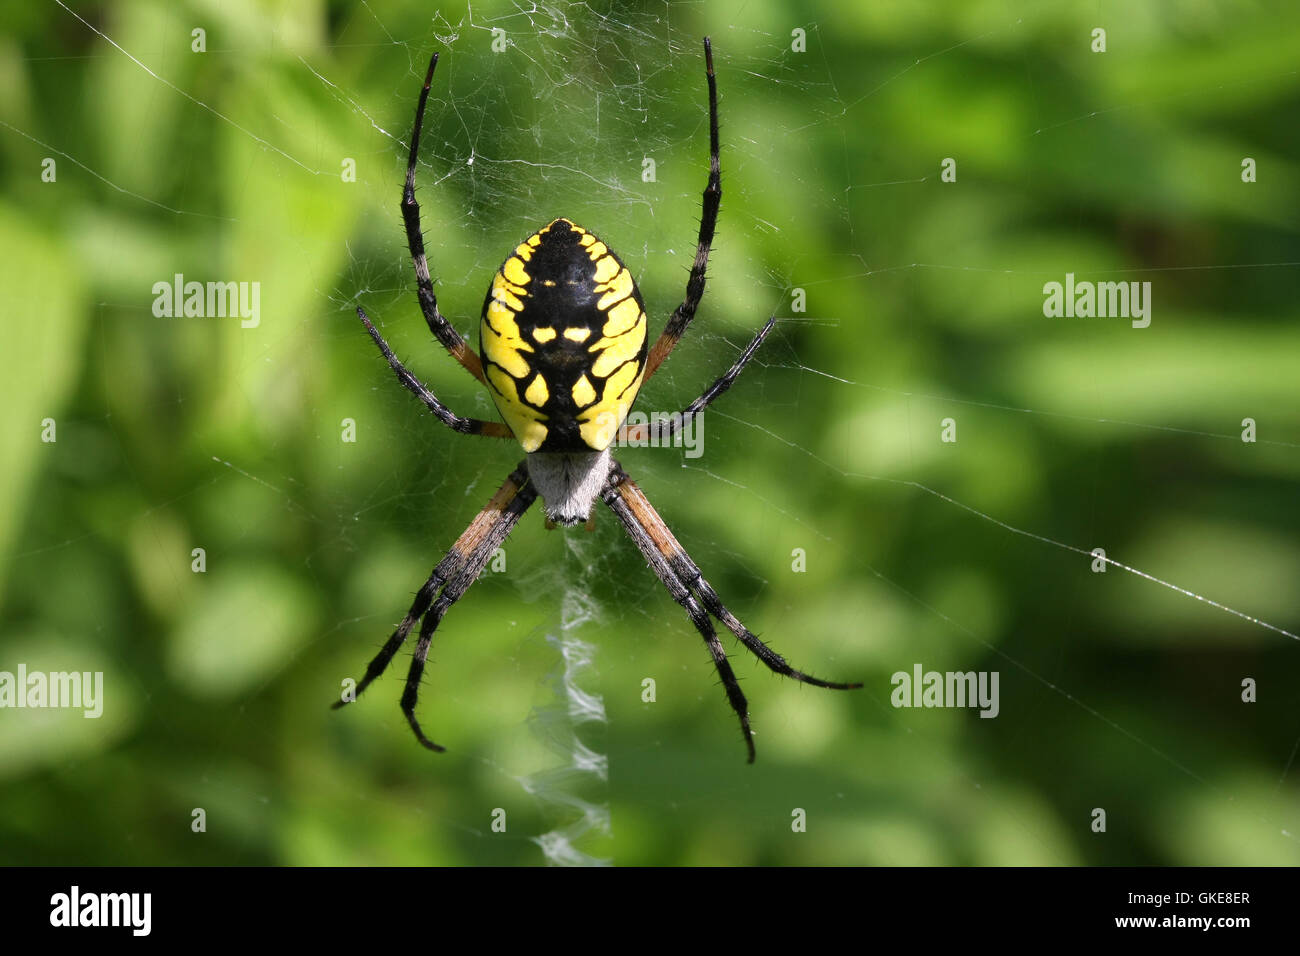 Black And Yellow Garden Spider Female Stock Photo 115254687 Alamy